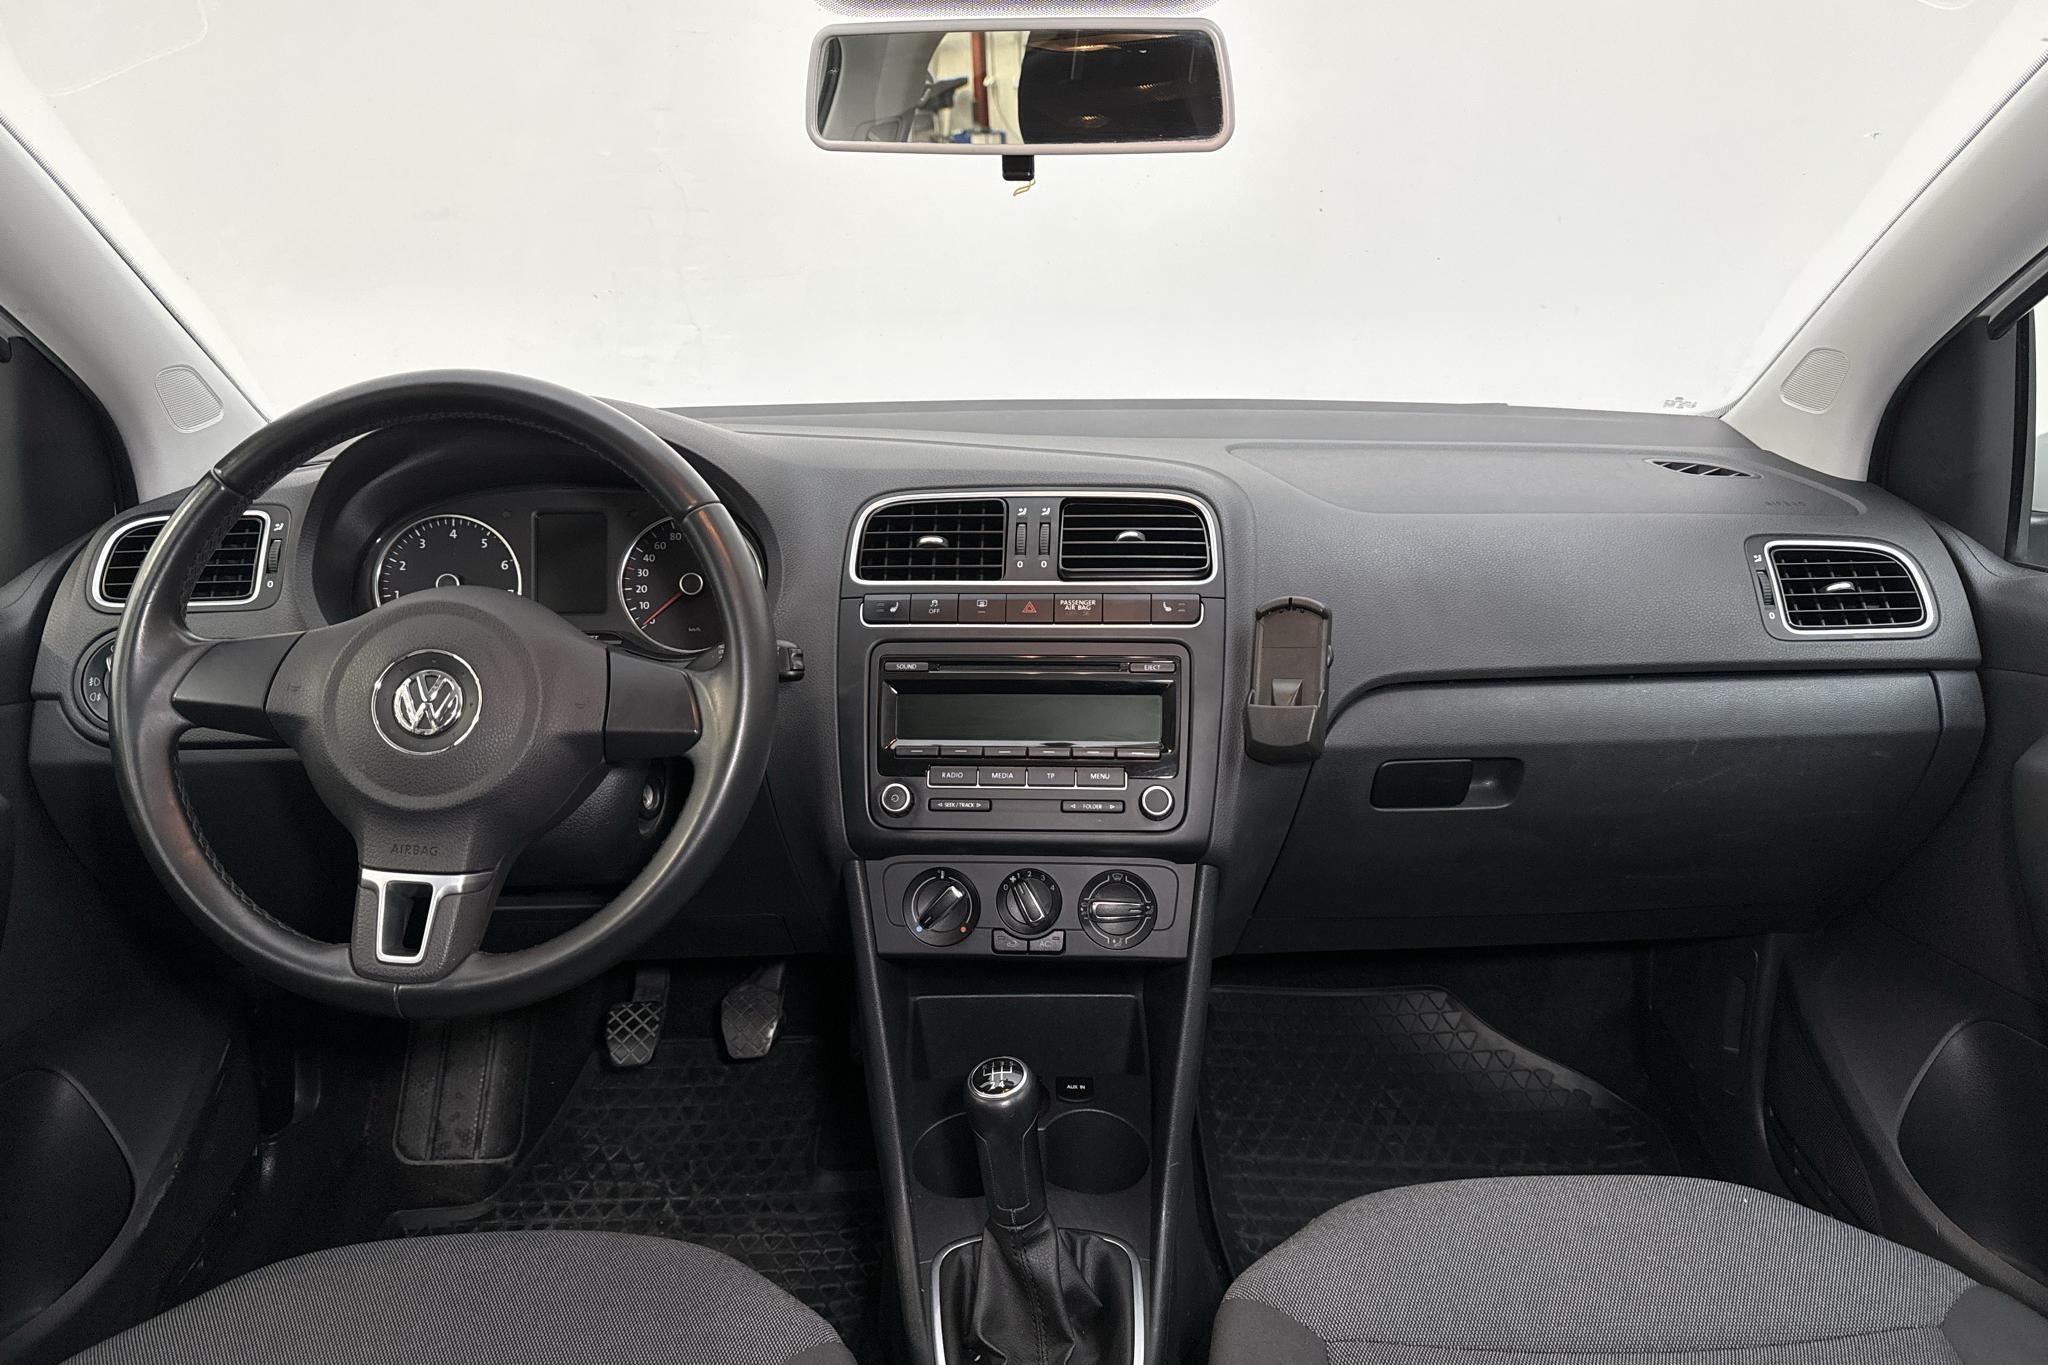 VW Polo 1.2 TSI 5dr (90hk) - 17 003 mil - Manuell - vit - 2013